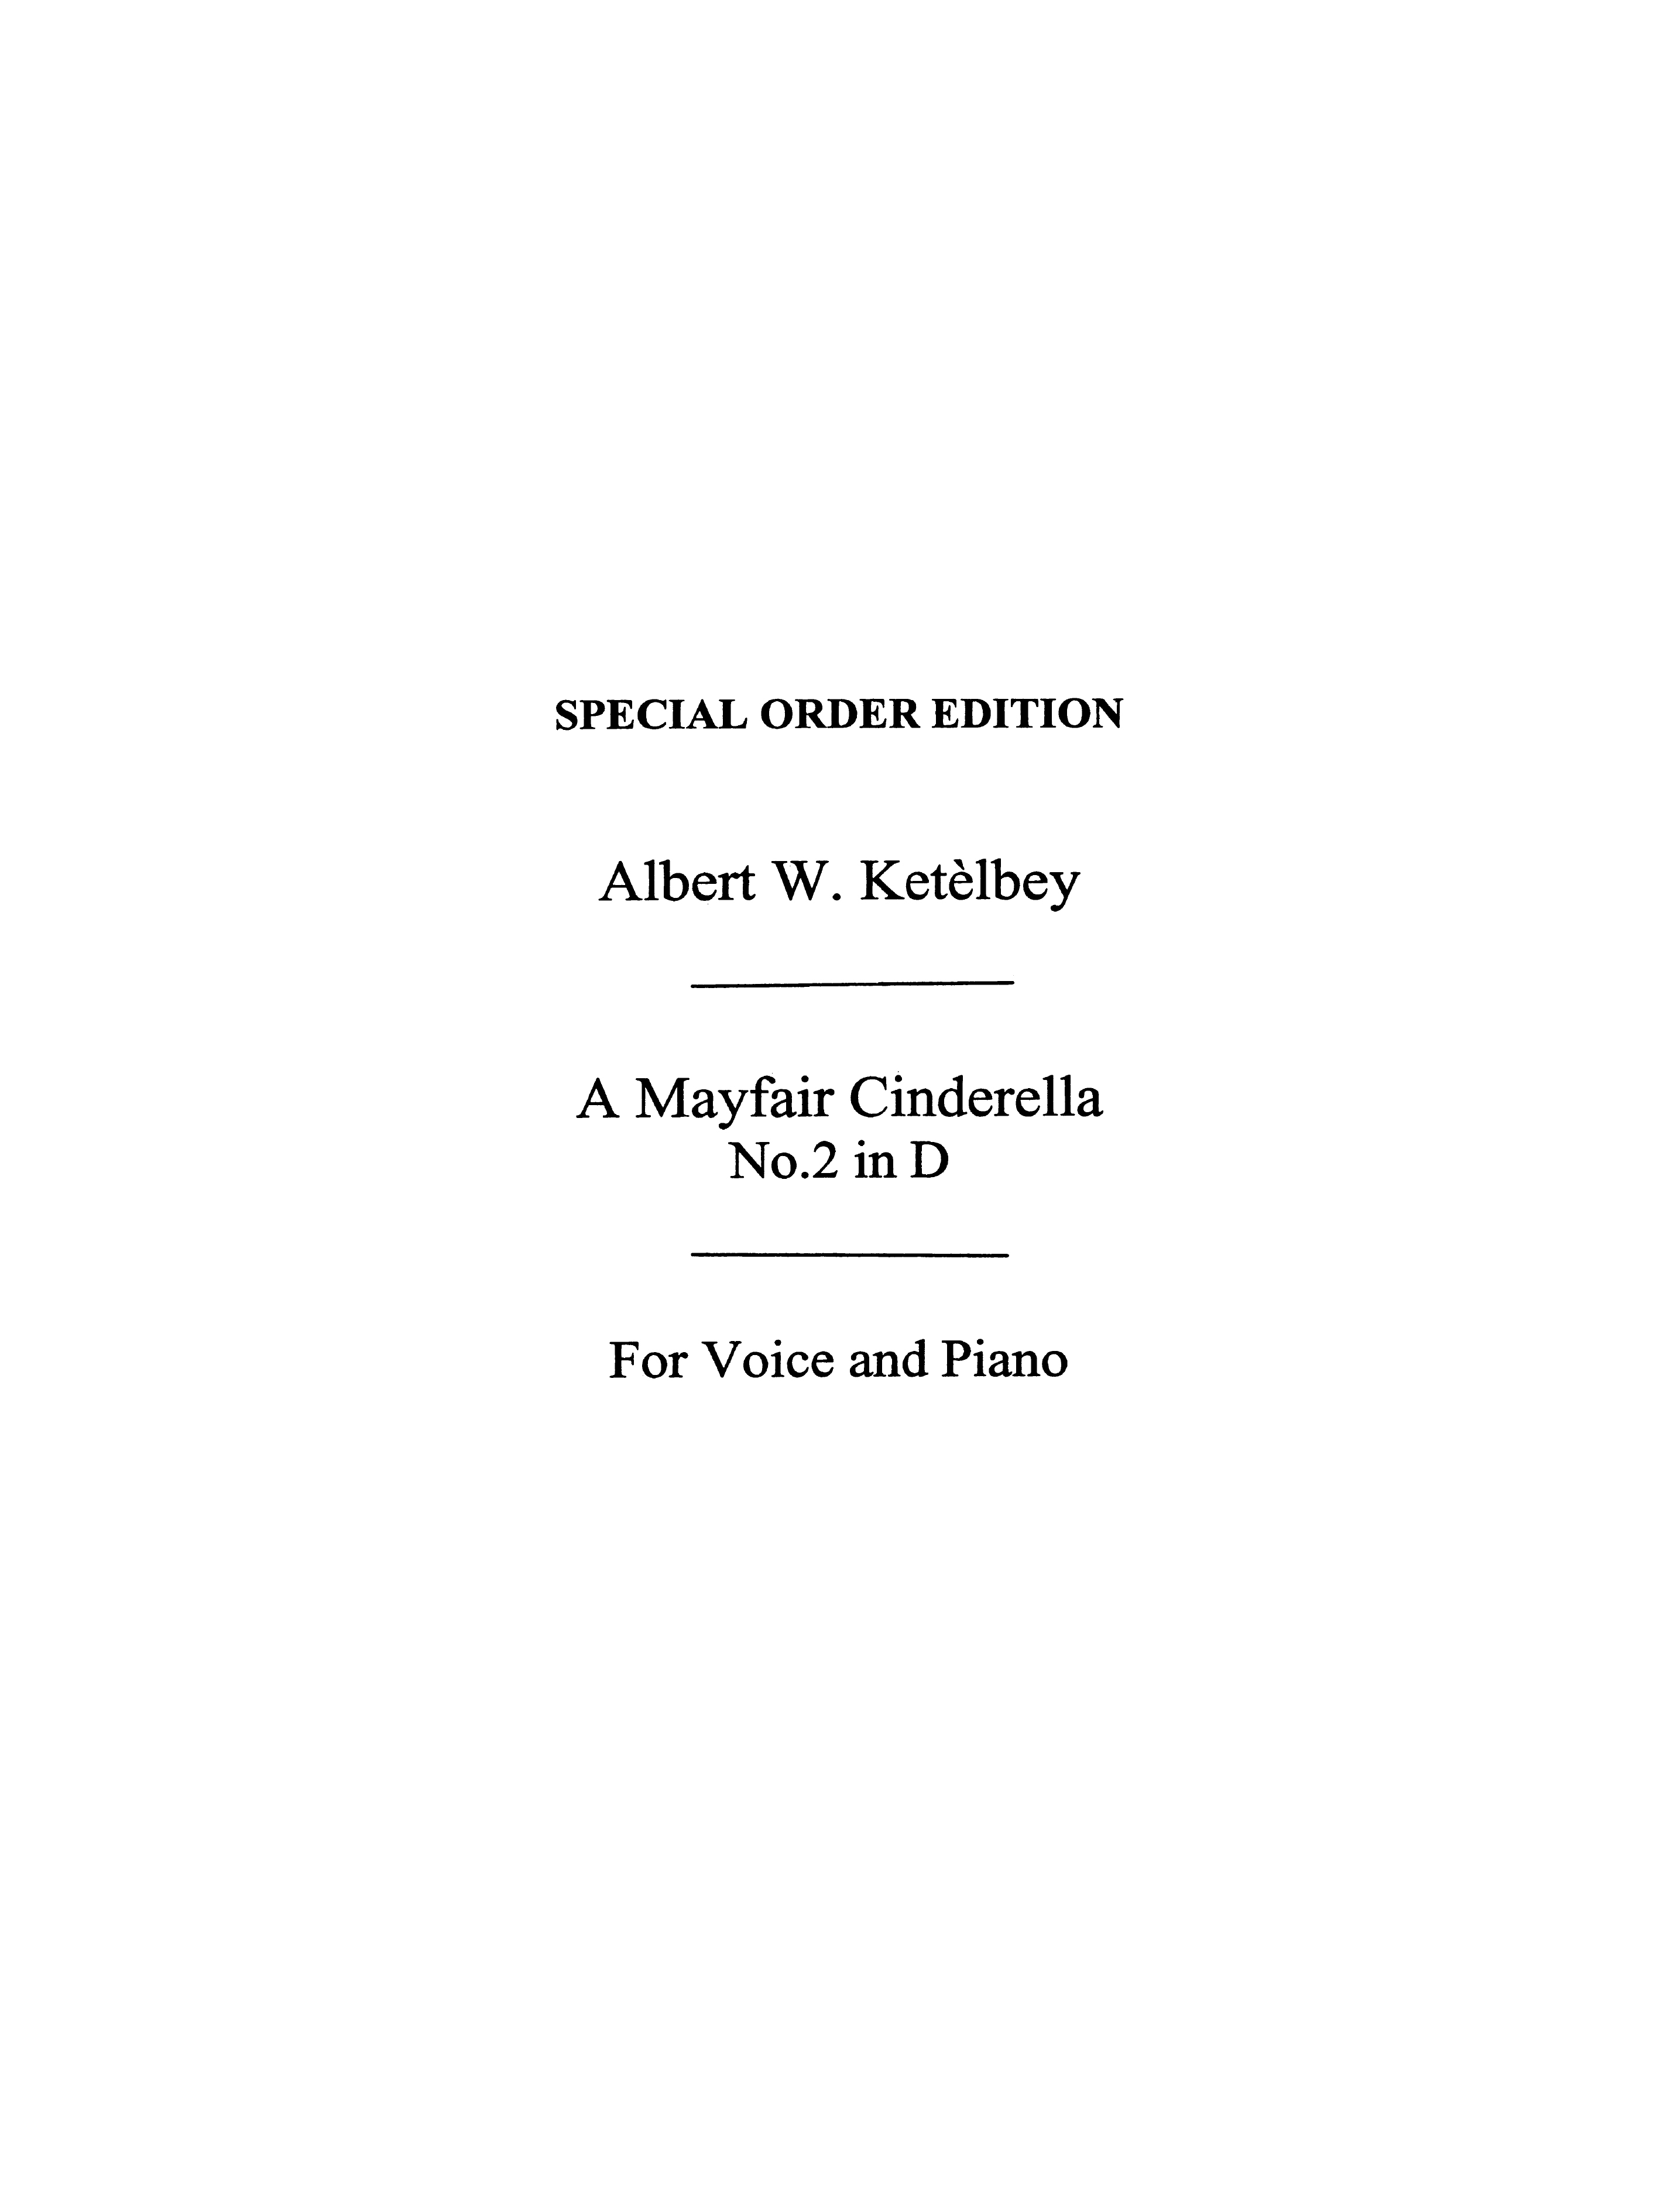 Albert Ketelbey: Mayfair Cinderella (Voice/Piano)